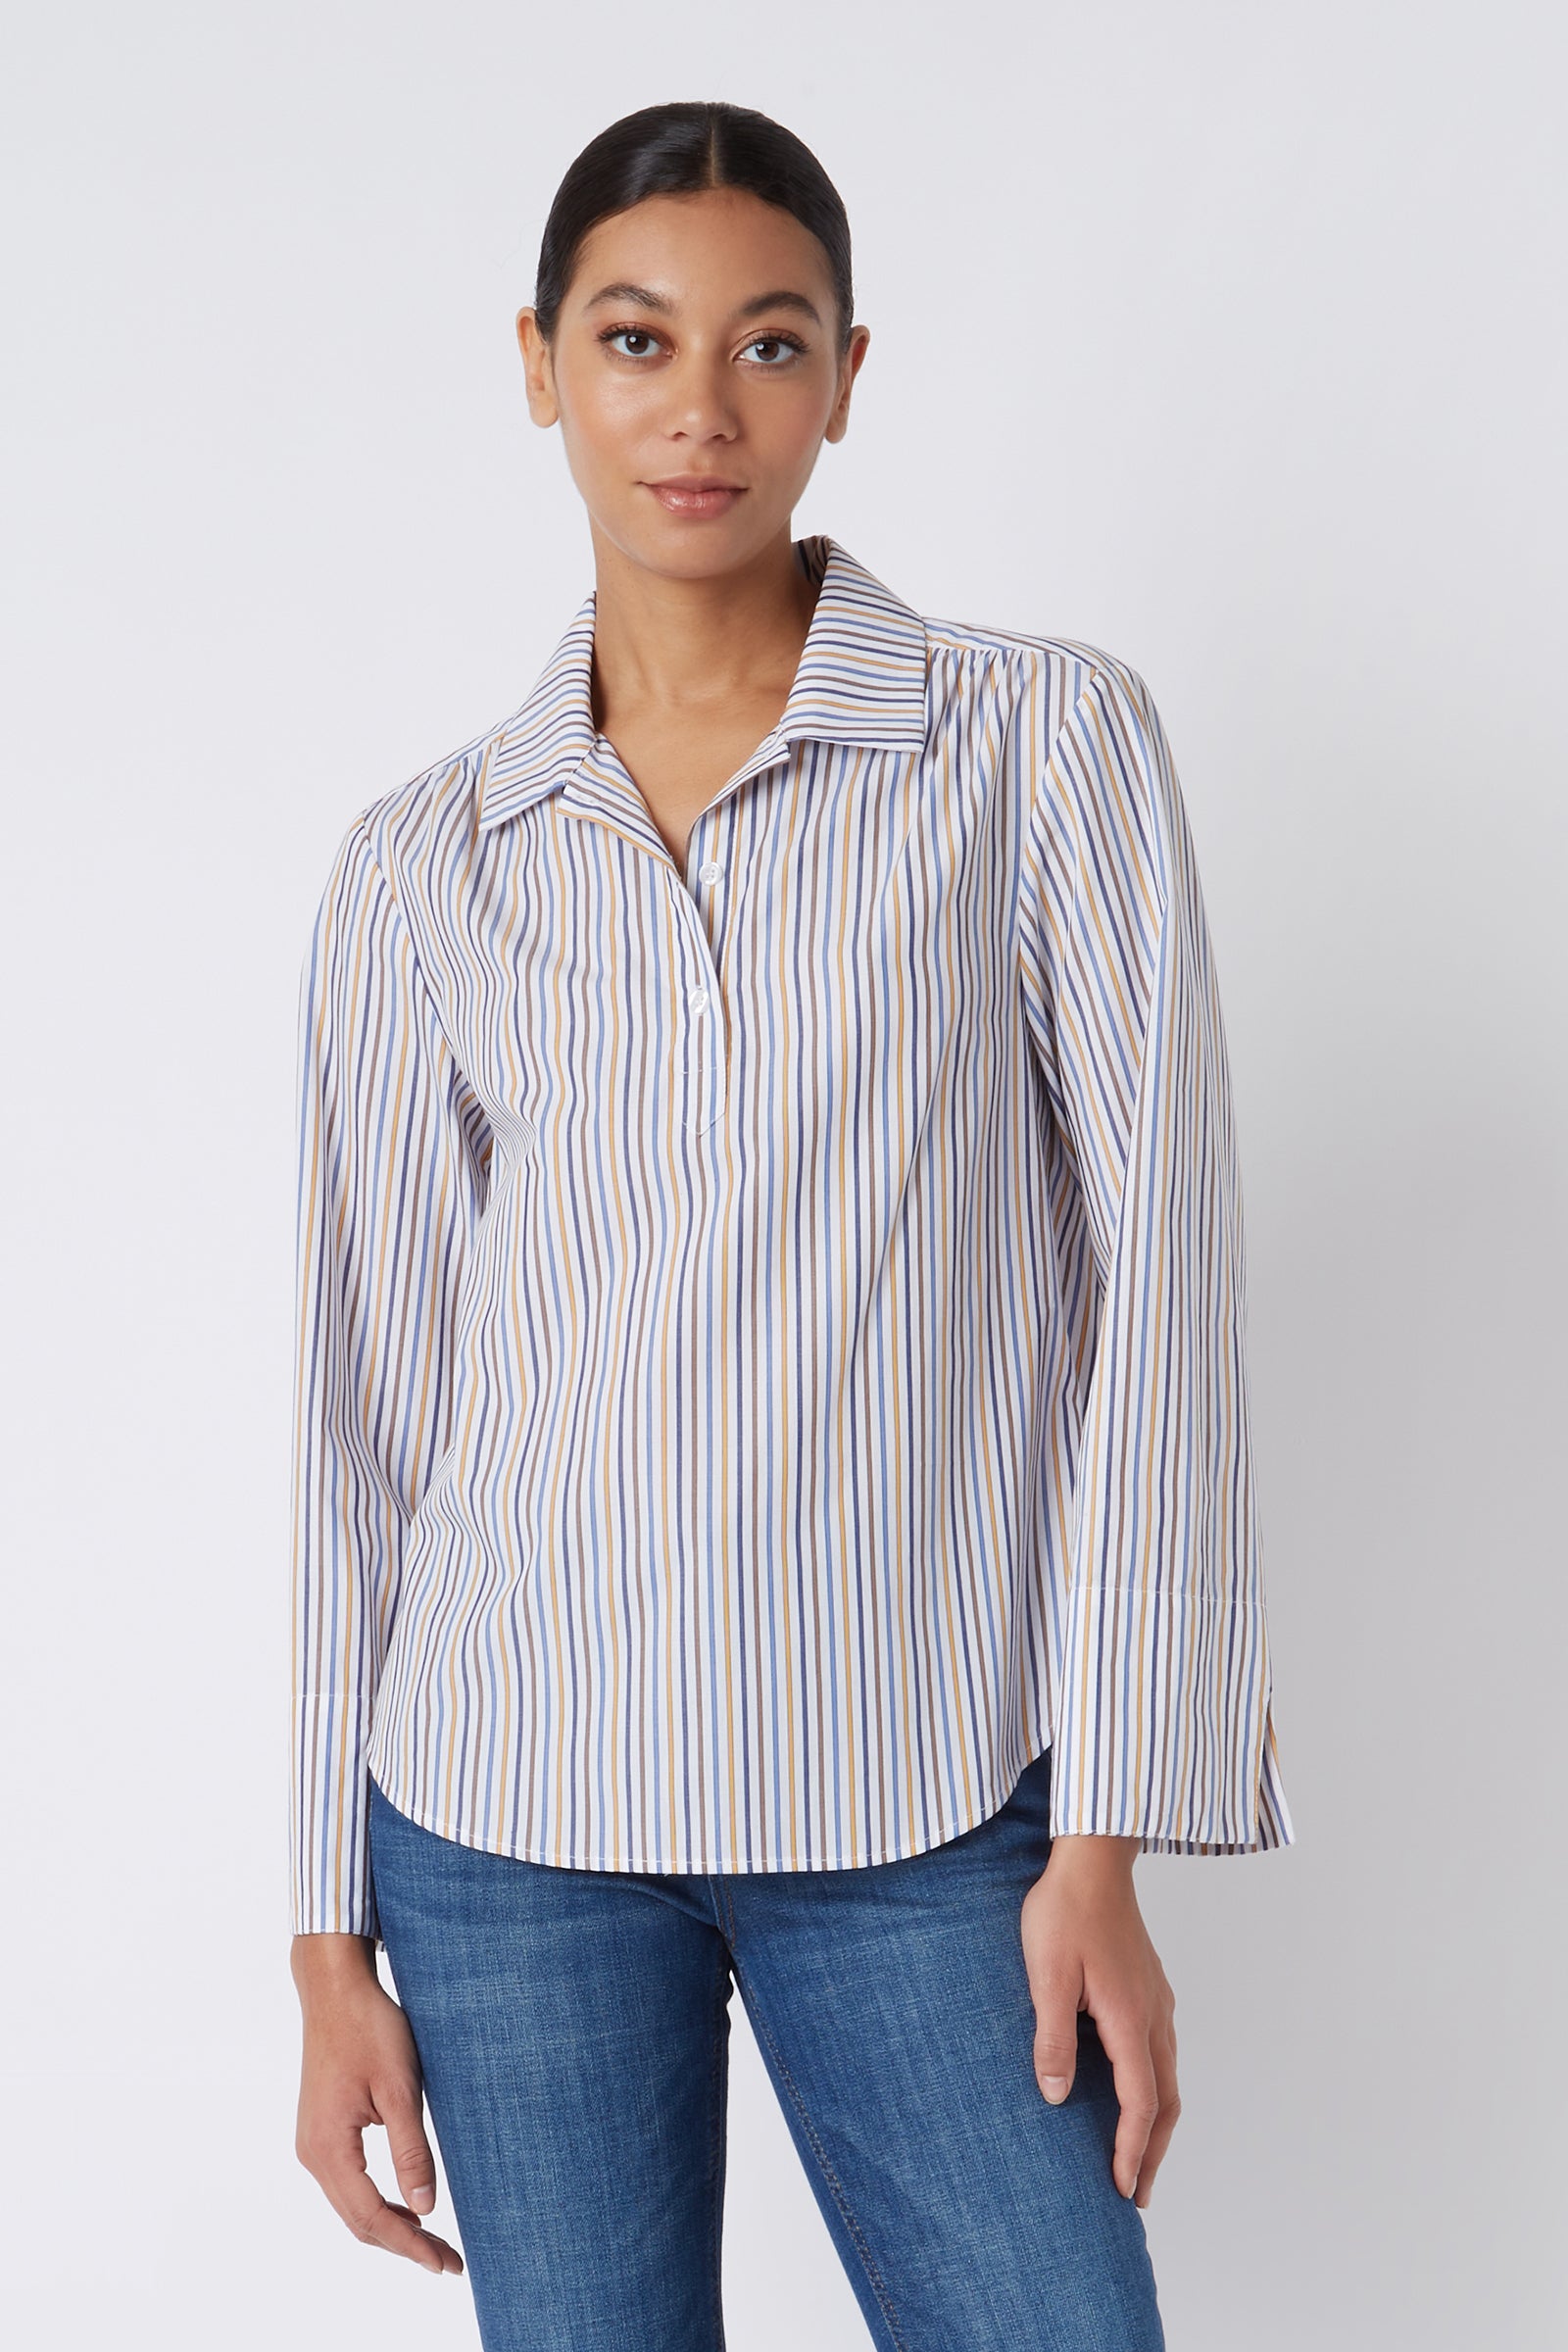 Shop All Womens Tailored Shirts – KAL RIEMAN